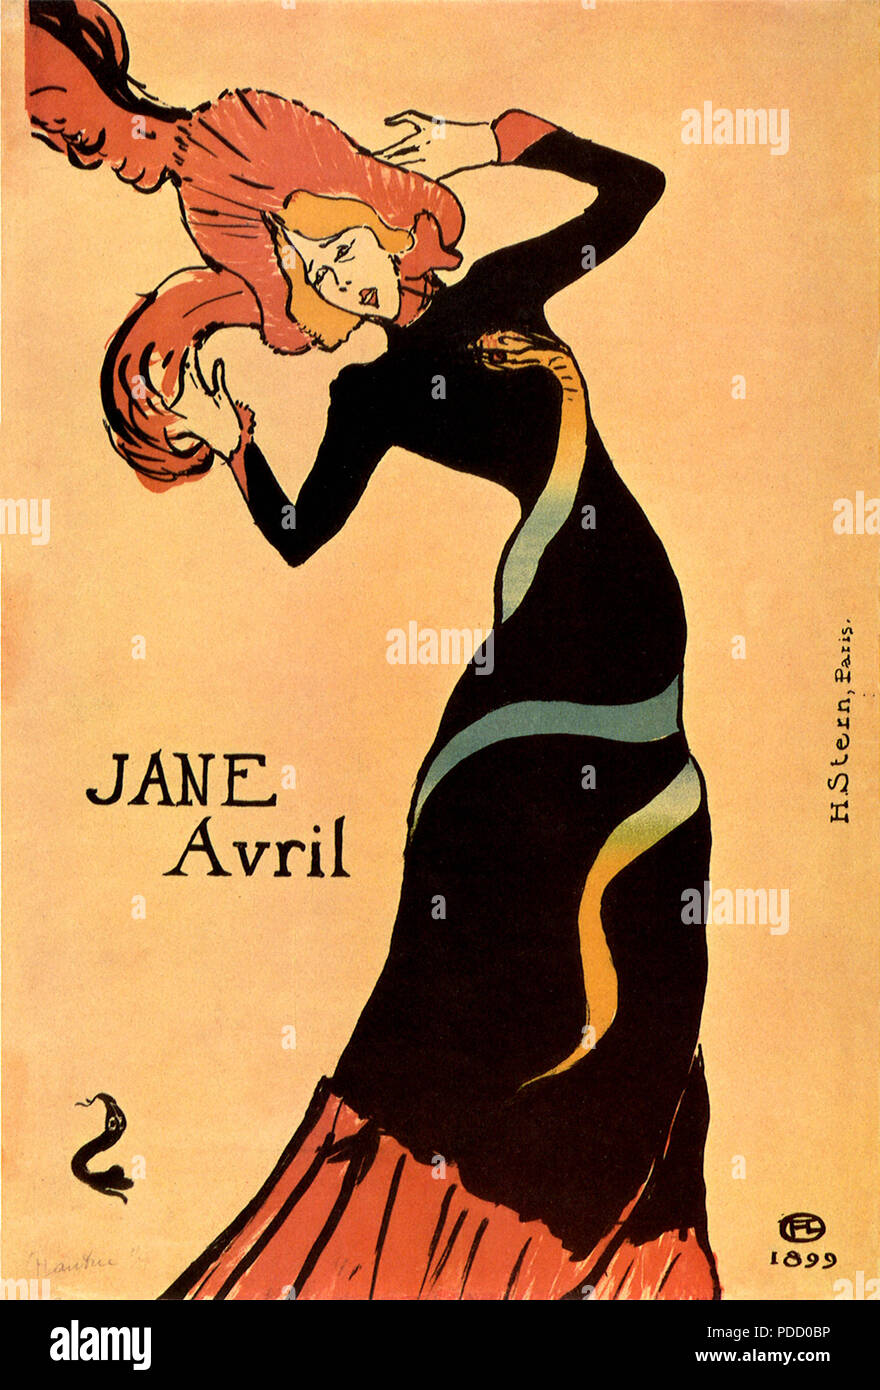 Jane Avril, Toulouse-Lautrec, Henri de, 1899. Stock Photo